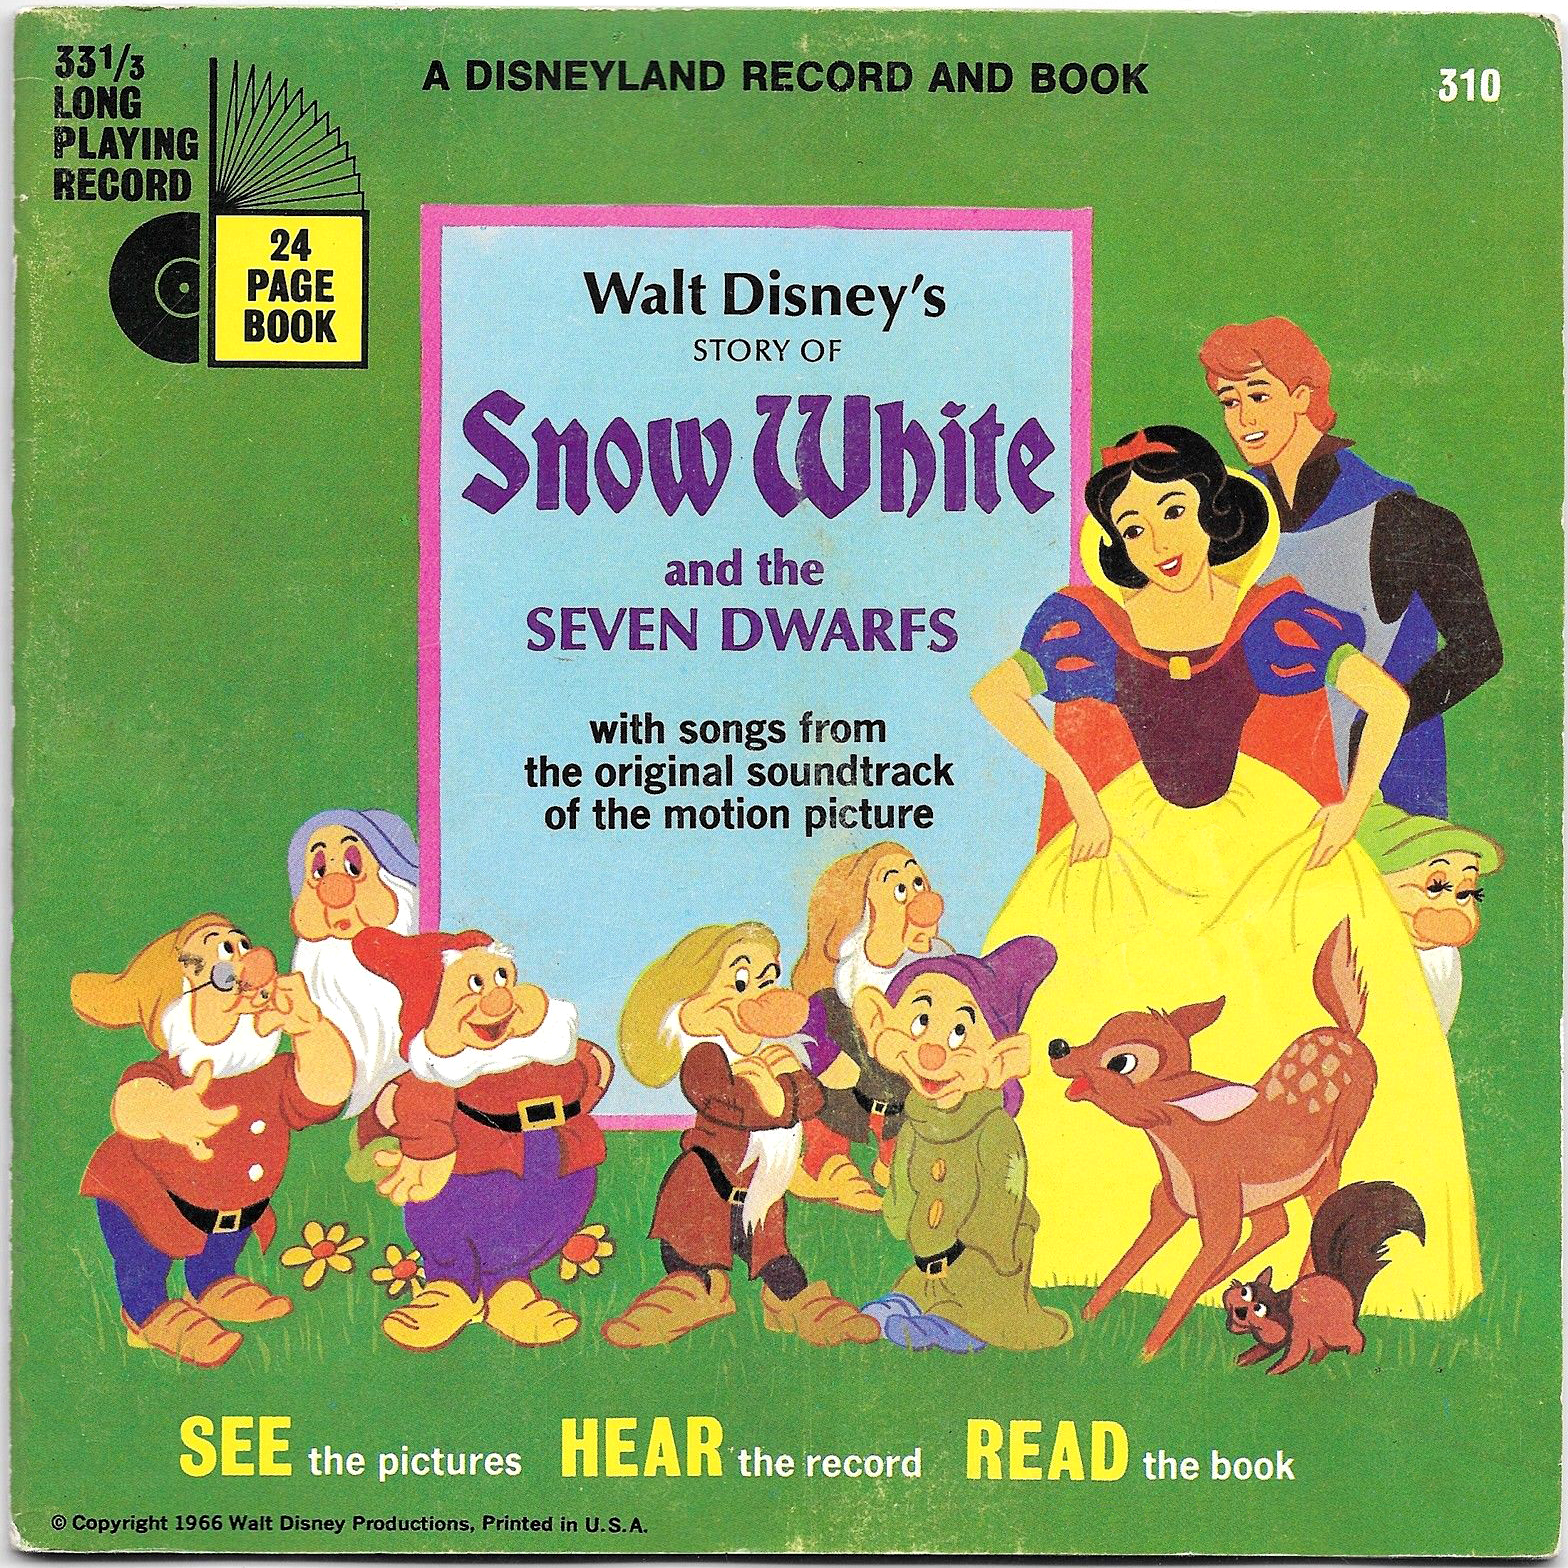 Filmic Light - Snow White Archive: 1966 US 'Snow White' Read-Along